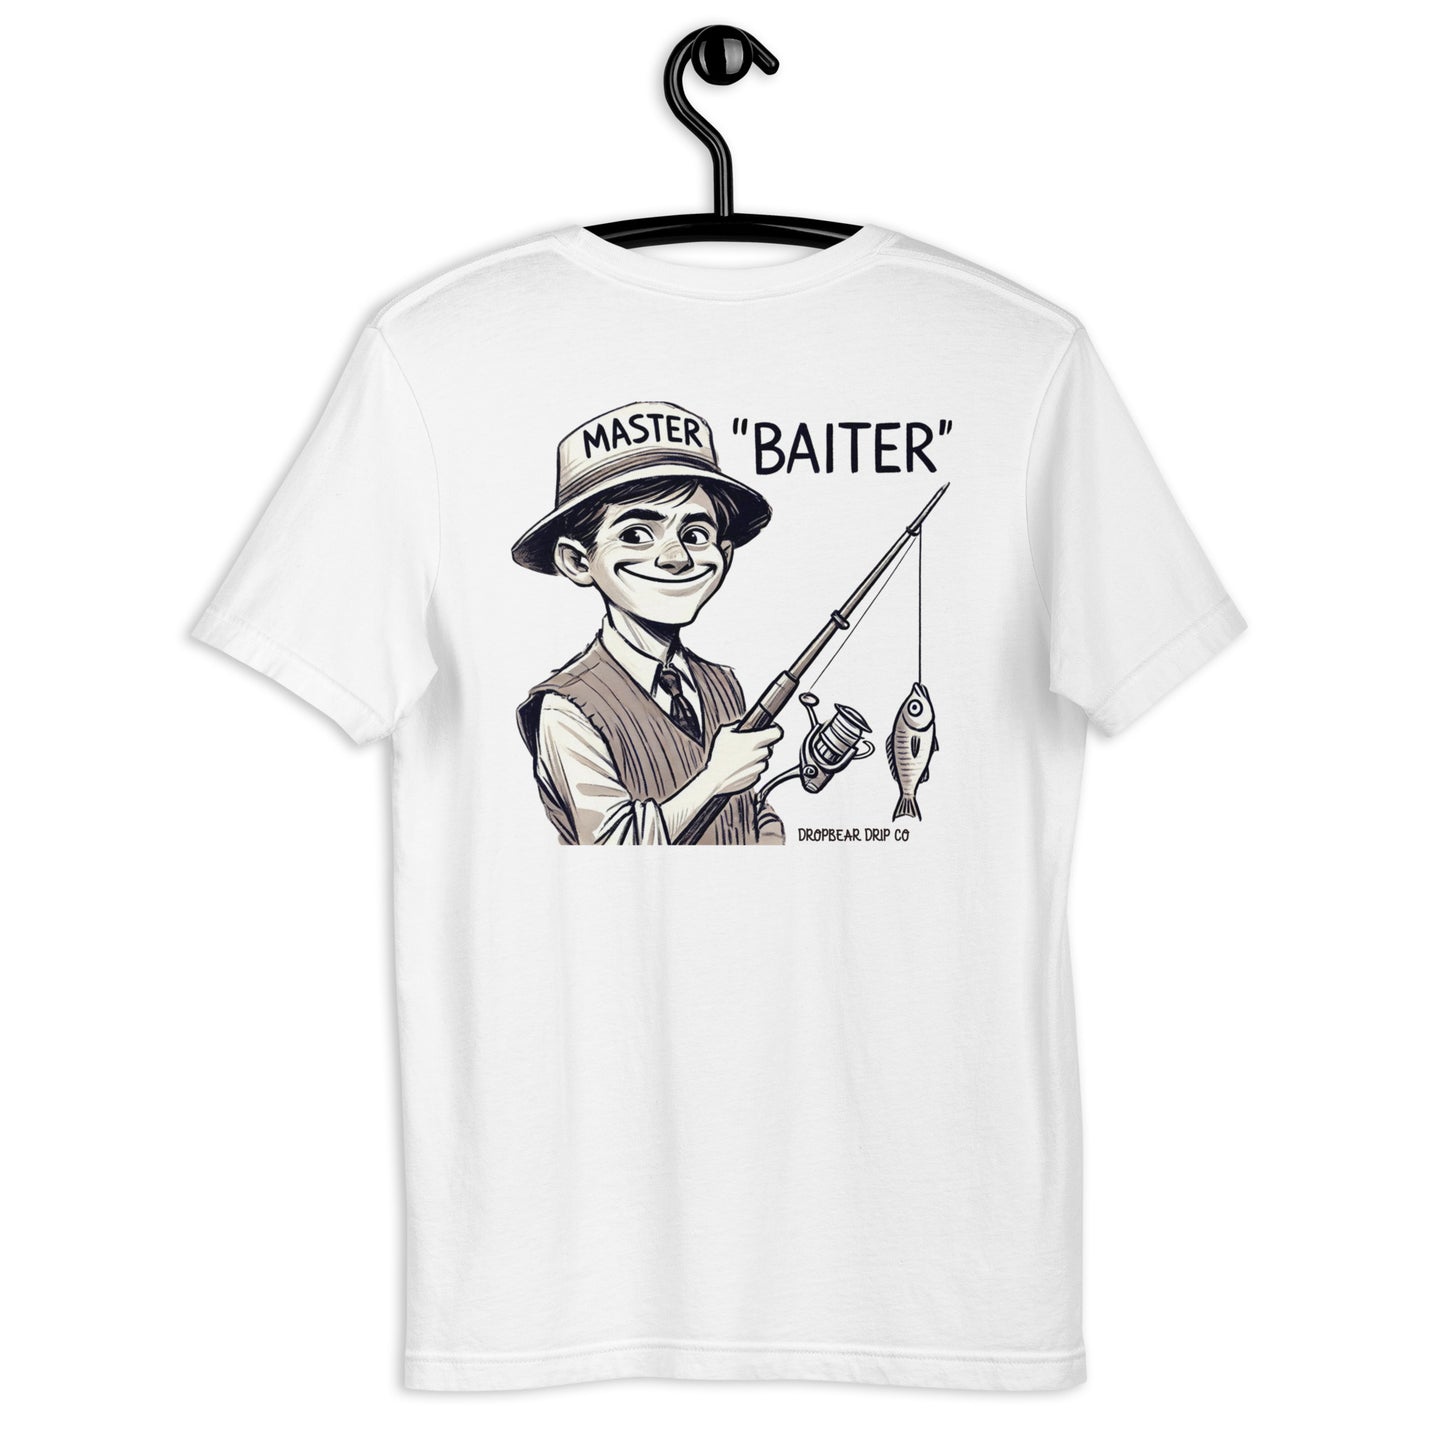 Master "Baiter" - Classic Cotton Tee